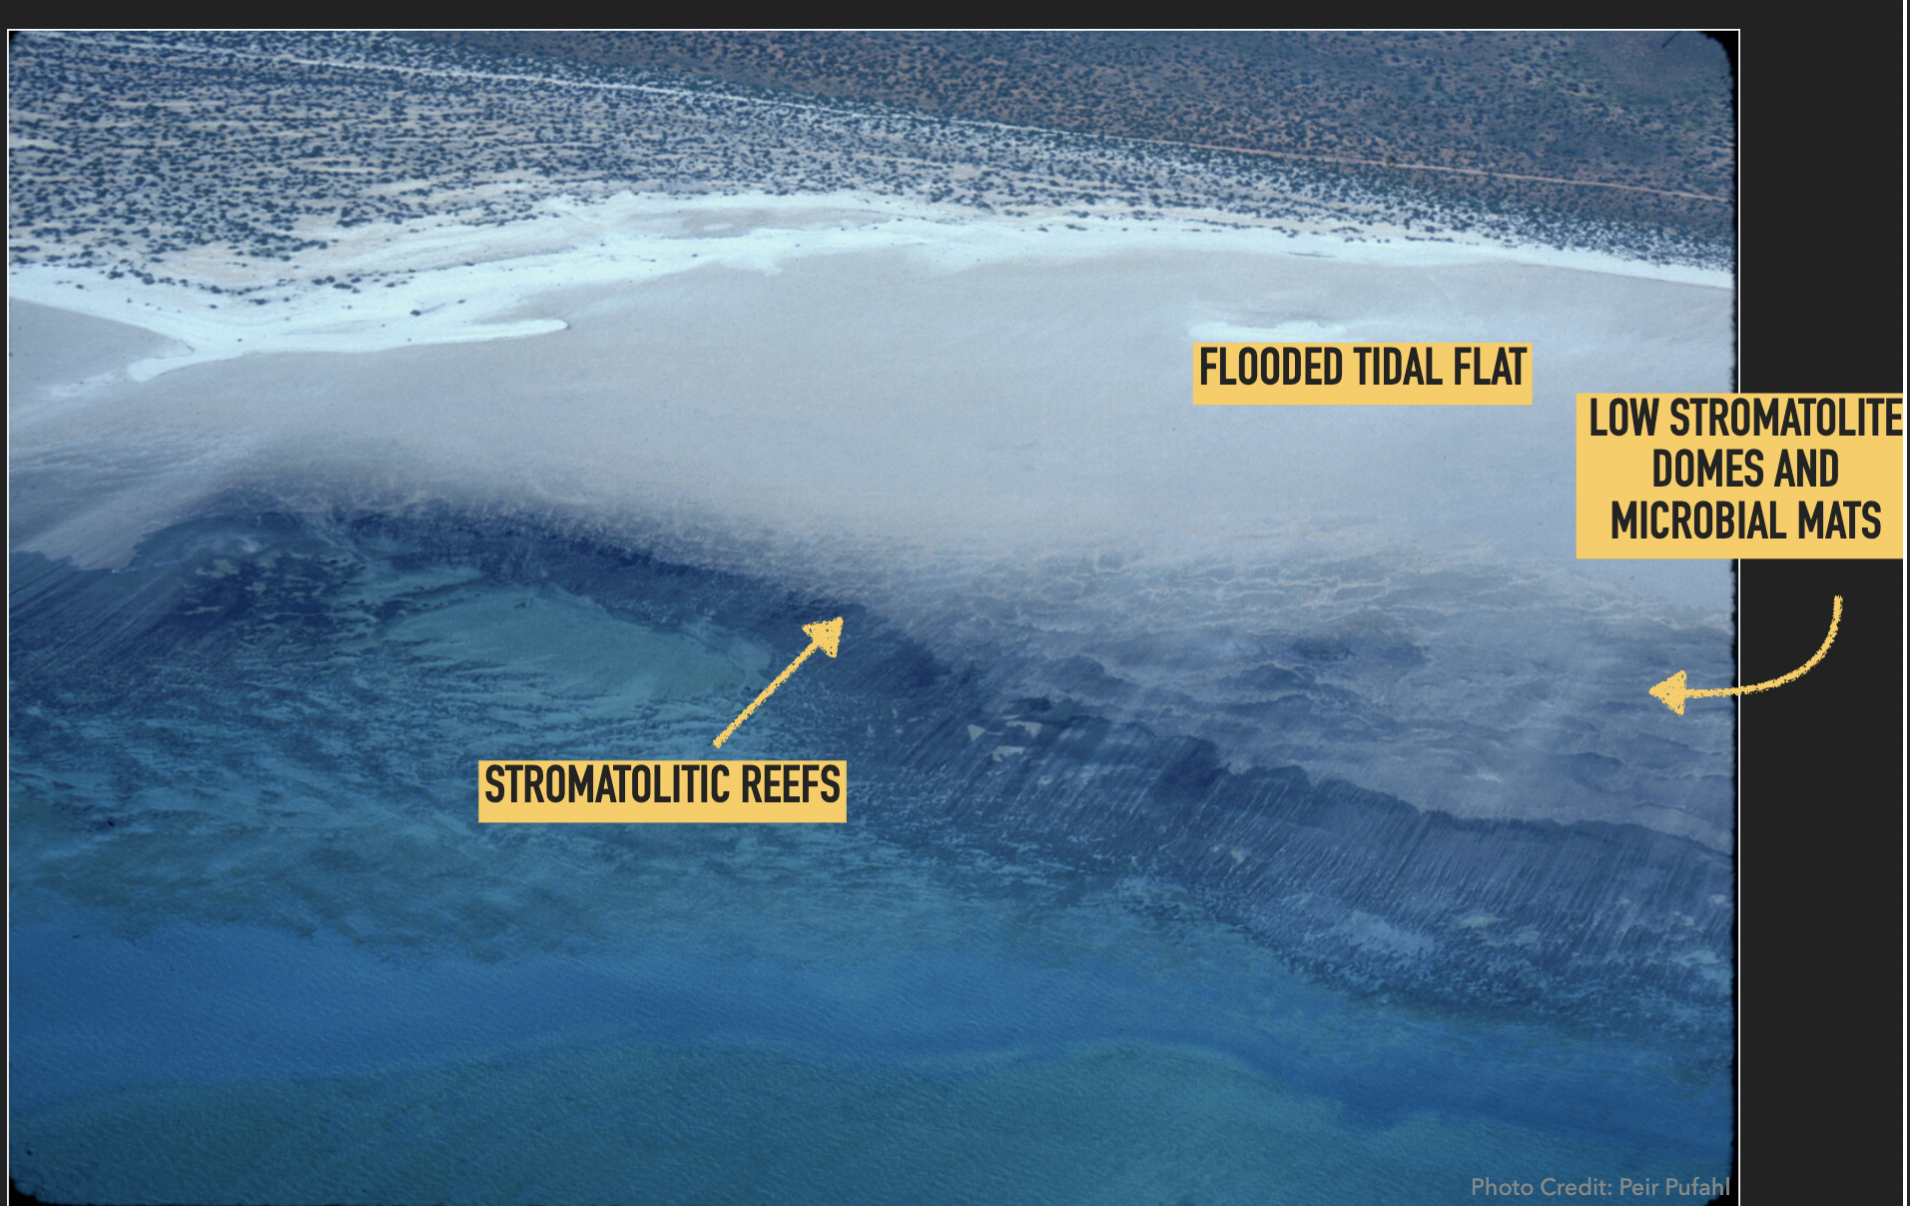 <ol><li><p>Stromatolitic reef</p></li><li><p>Flooded tidal flat</p></li><li><p>Low stromatolite domes and microbial mats</p></li></ol>